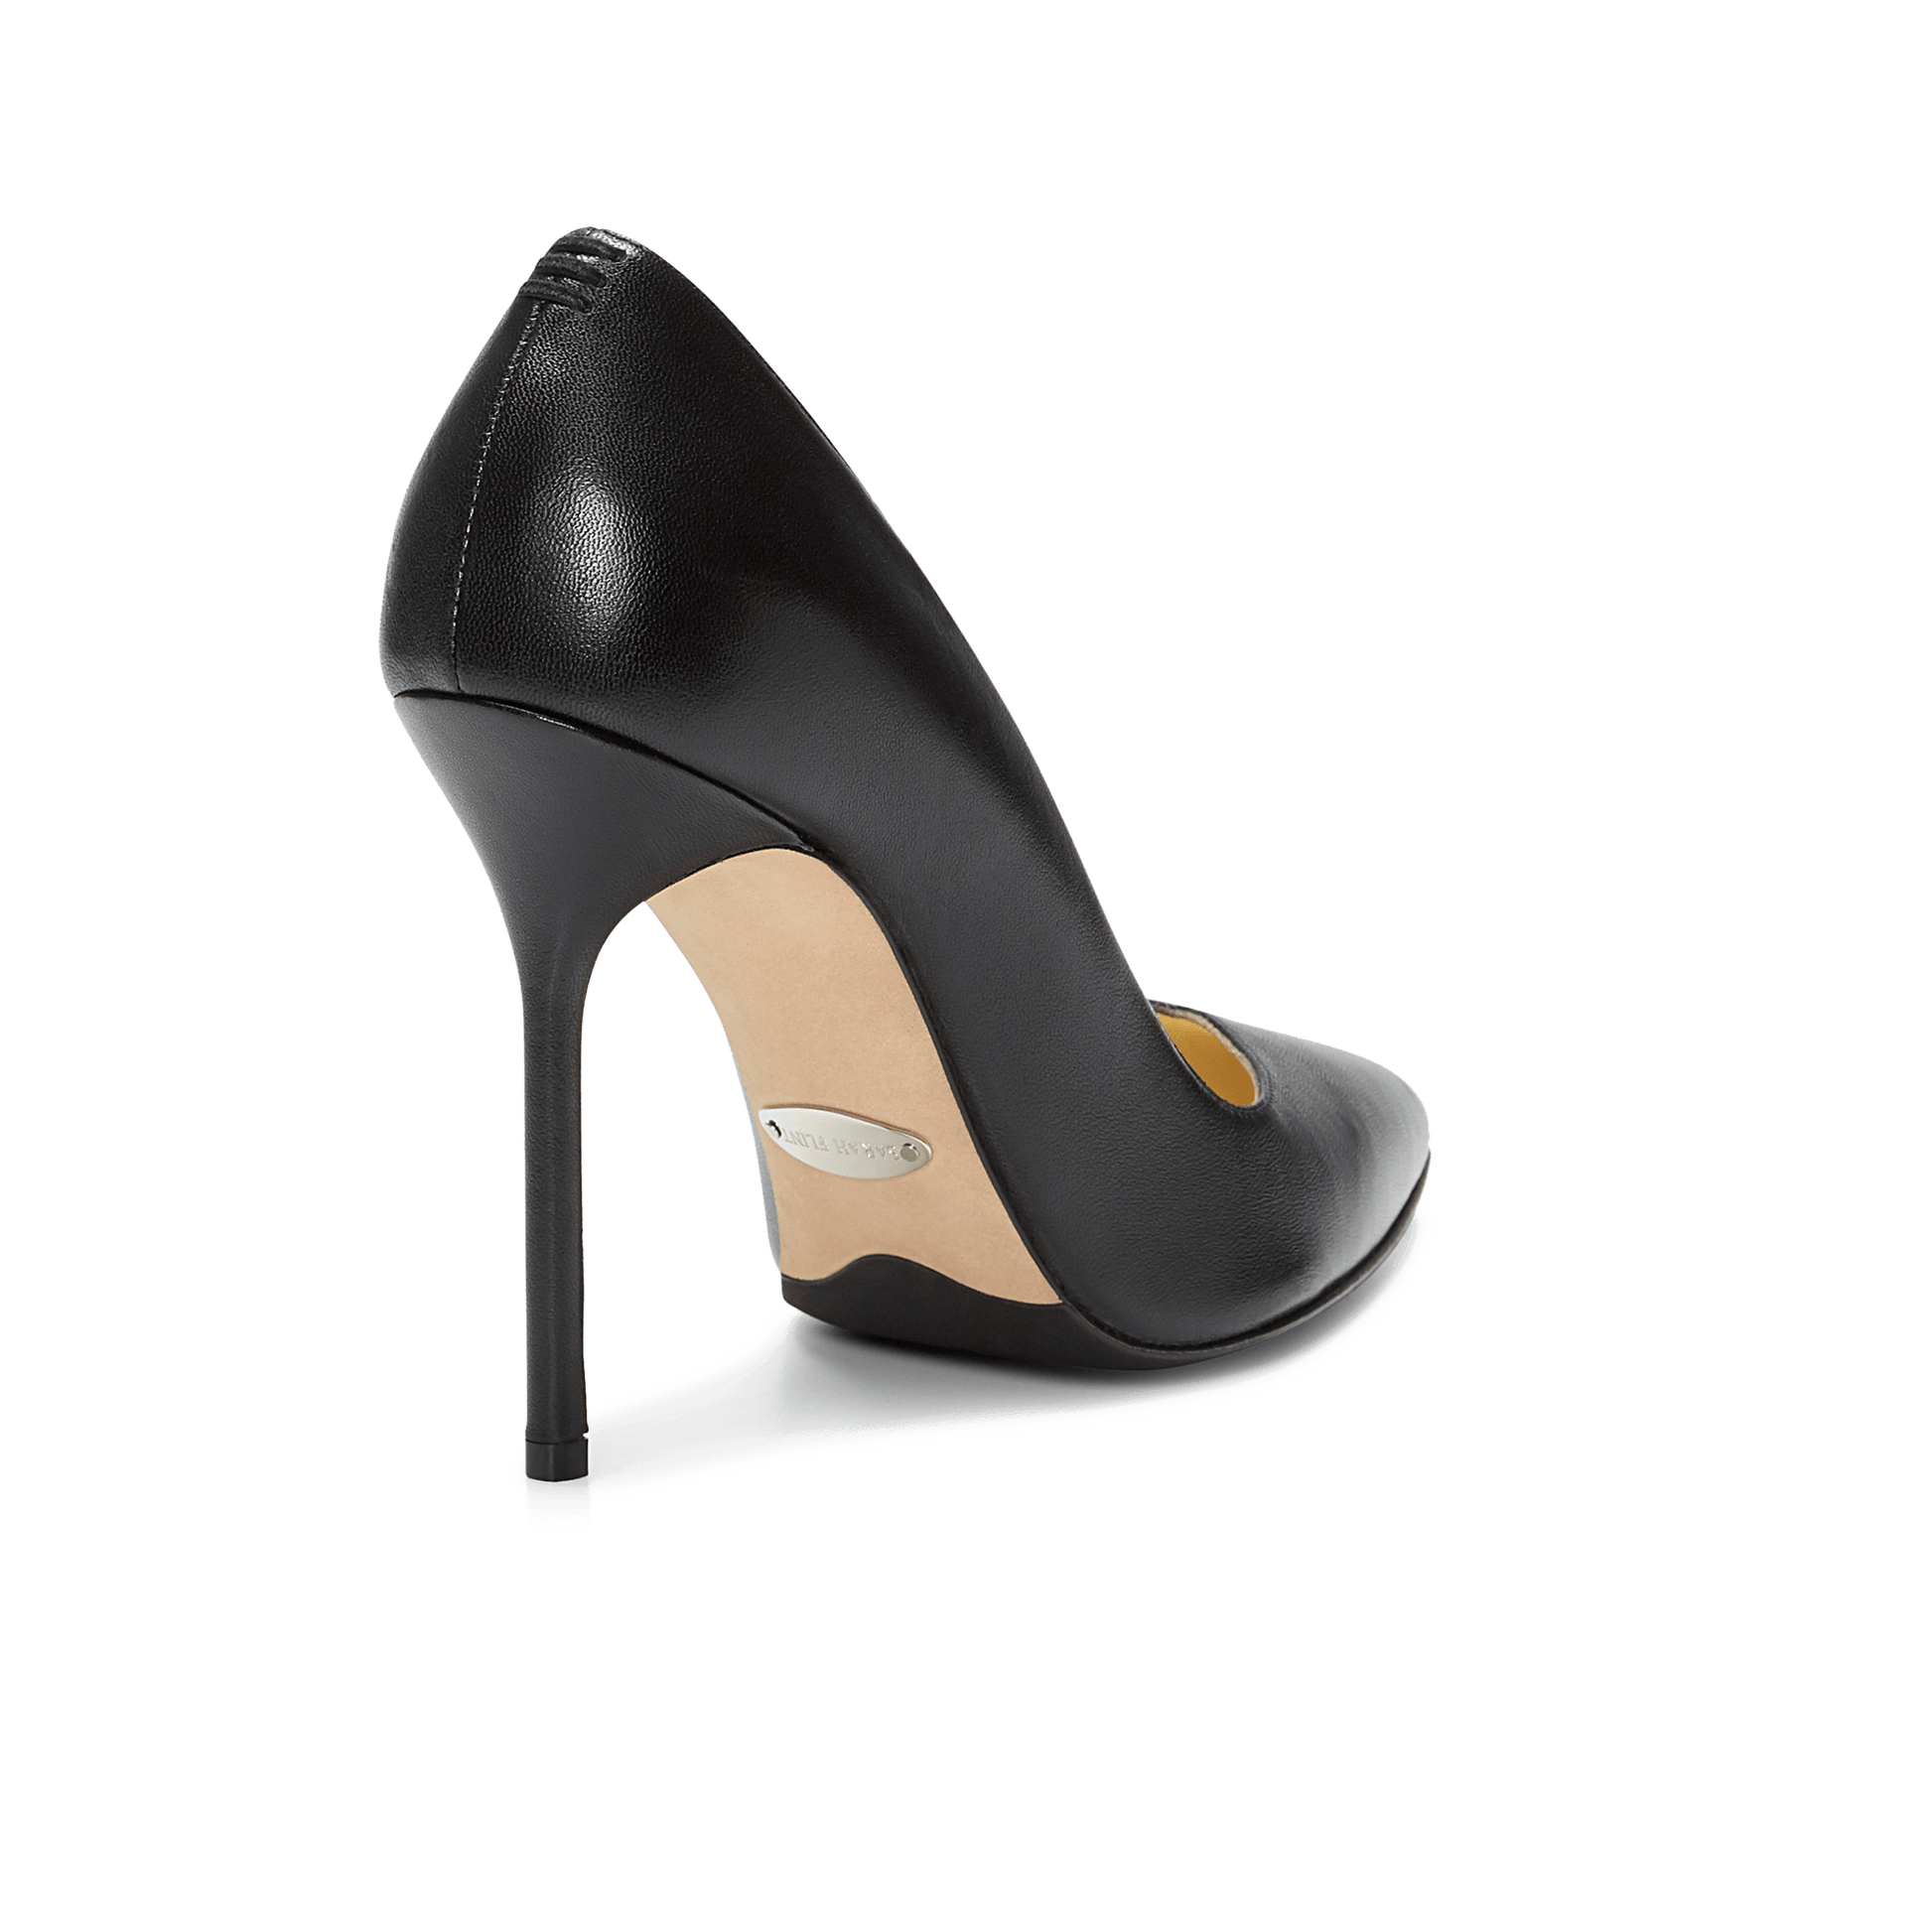 Sarah Flint Perfect Pump 100 Heels in Black Calf | Luxury Heels for Women | Handcrafted Designer Shoes Made in Italy